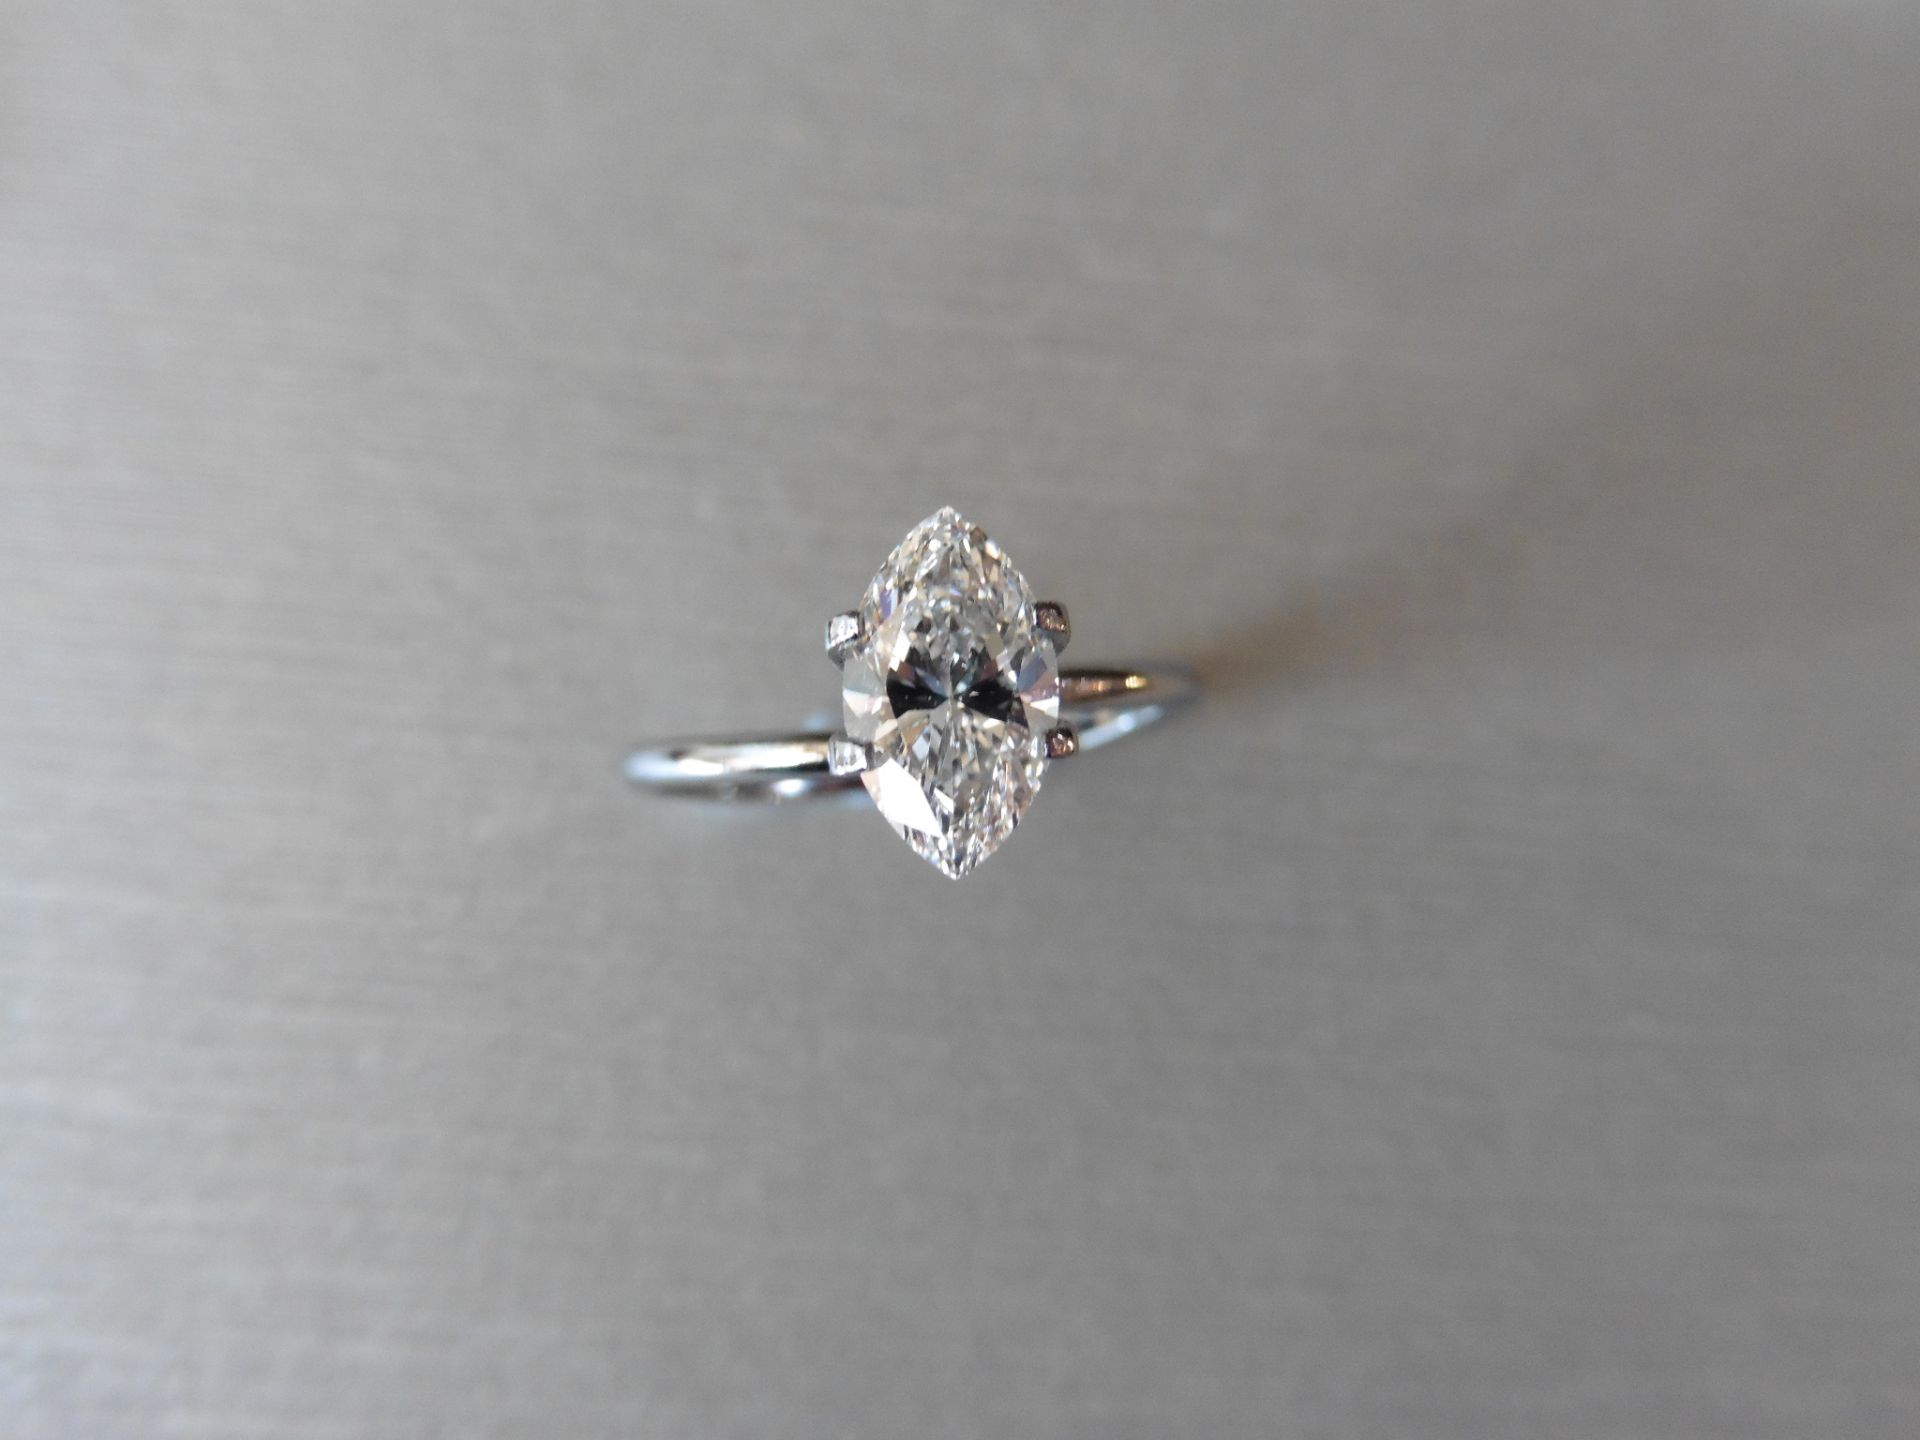 1.18ct single marquise cut diamond E colour Si1 clarity. 9.89 x 5.64 x 3.81. GIA certification.